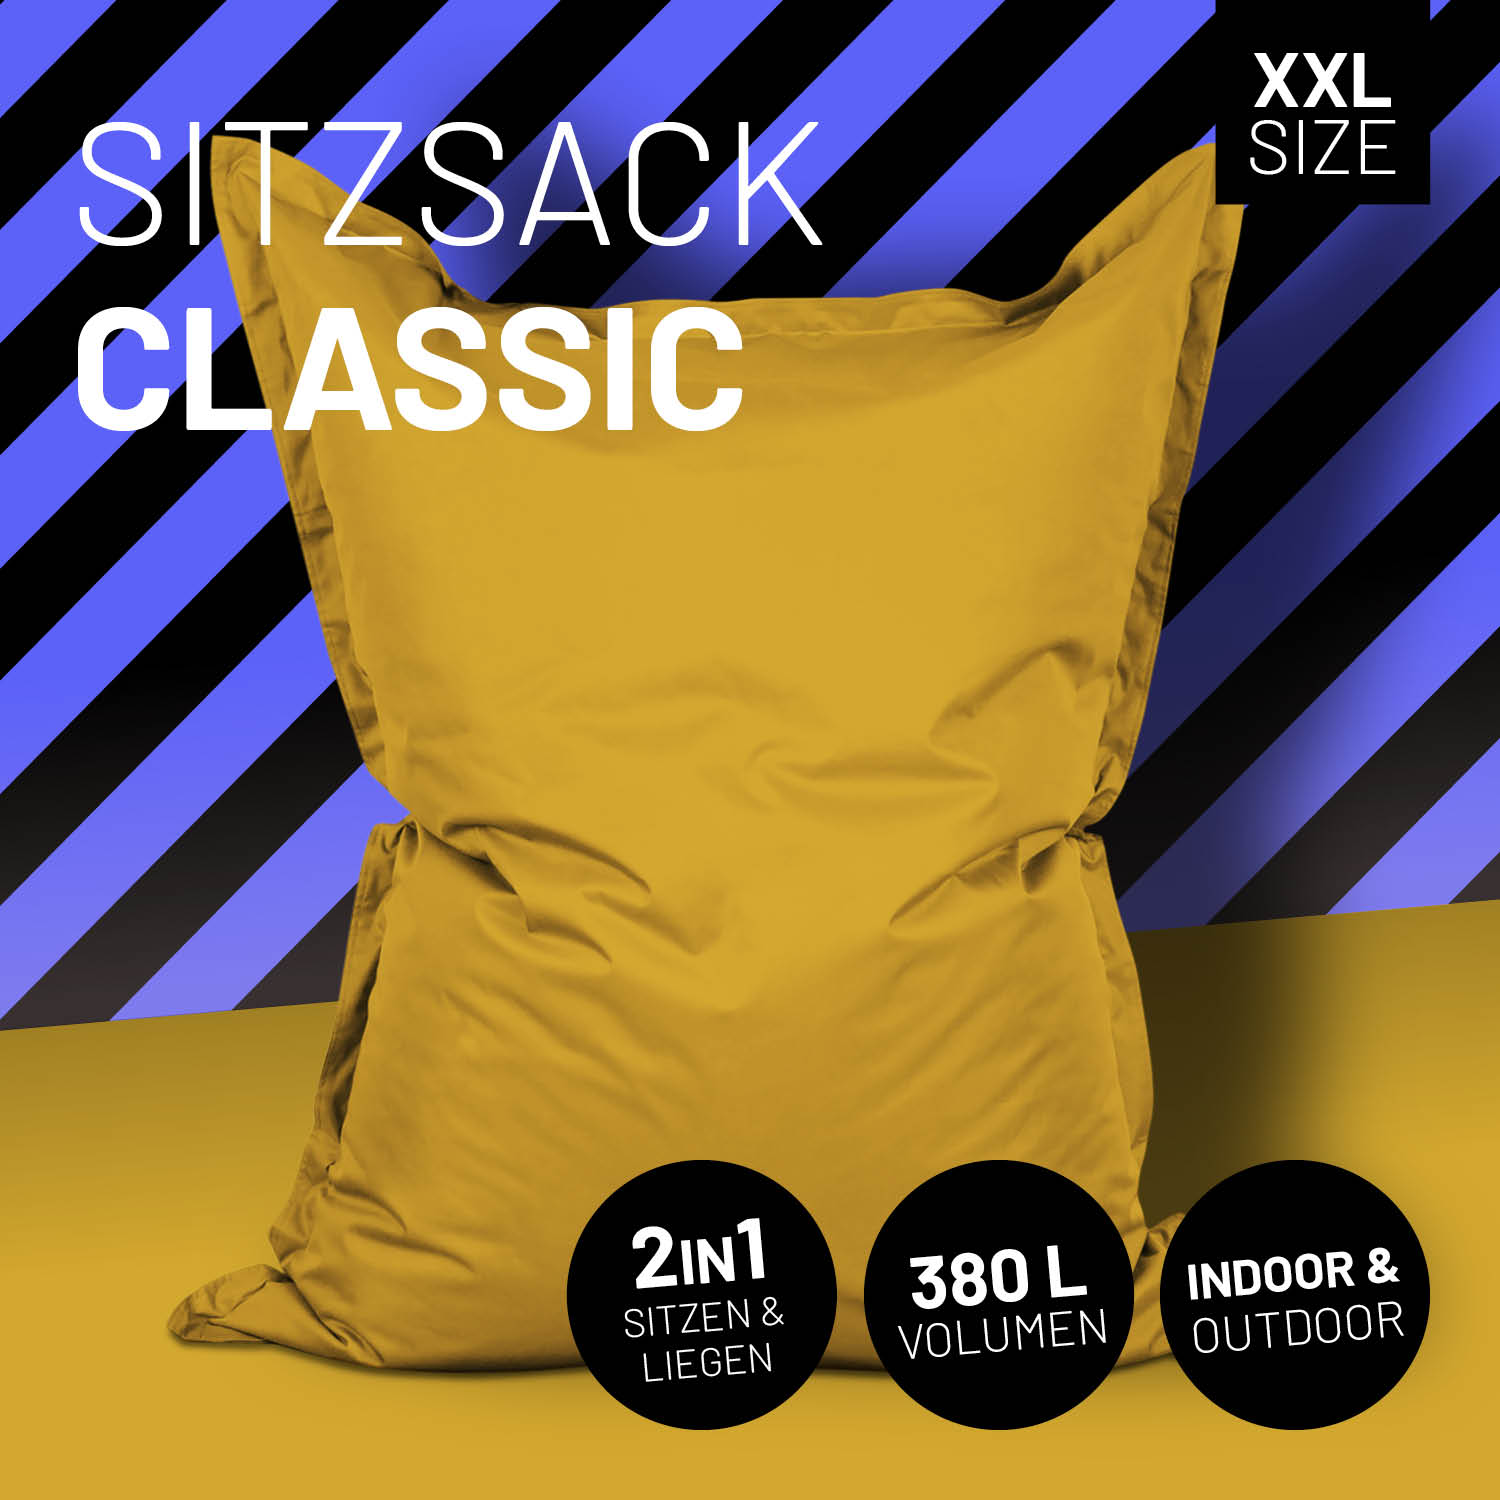 LUMALAND Sitzsack Classic XXL (380 L) - In- & outdoor - Senfgelb